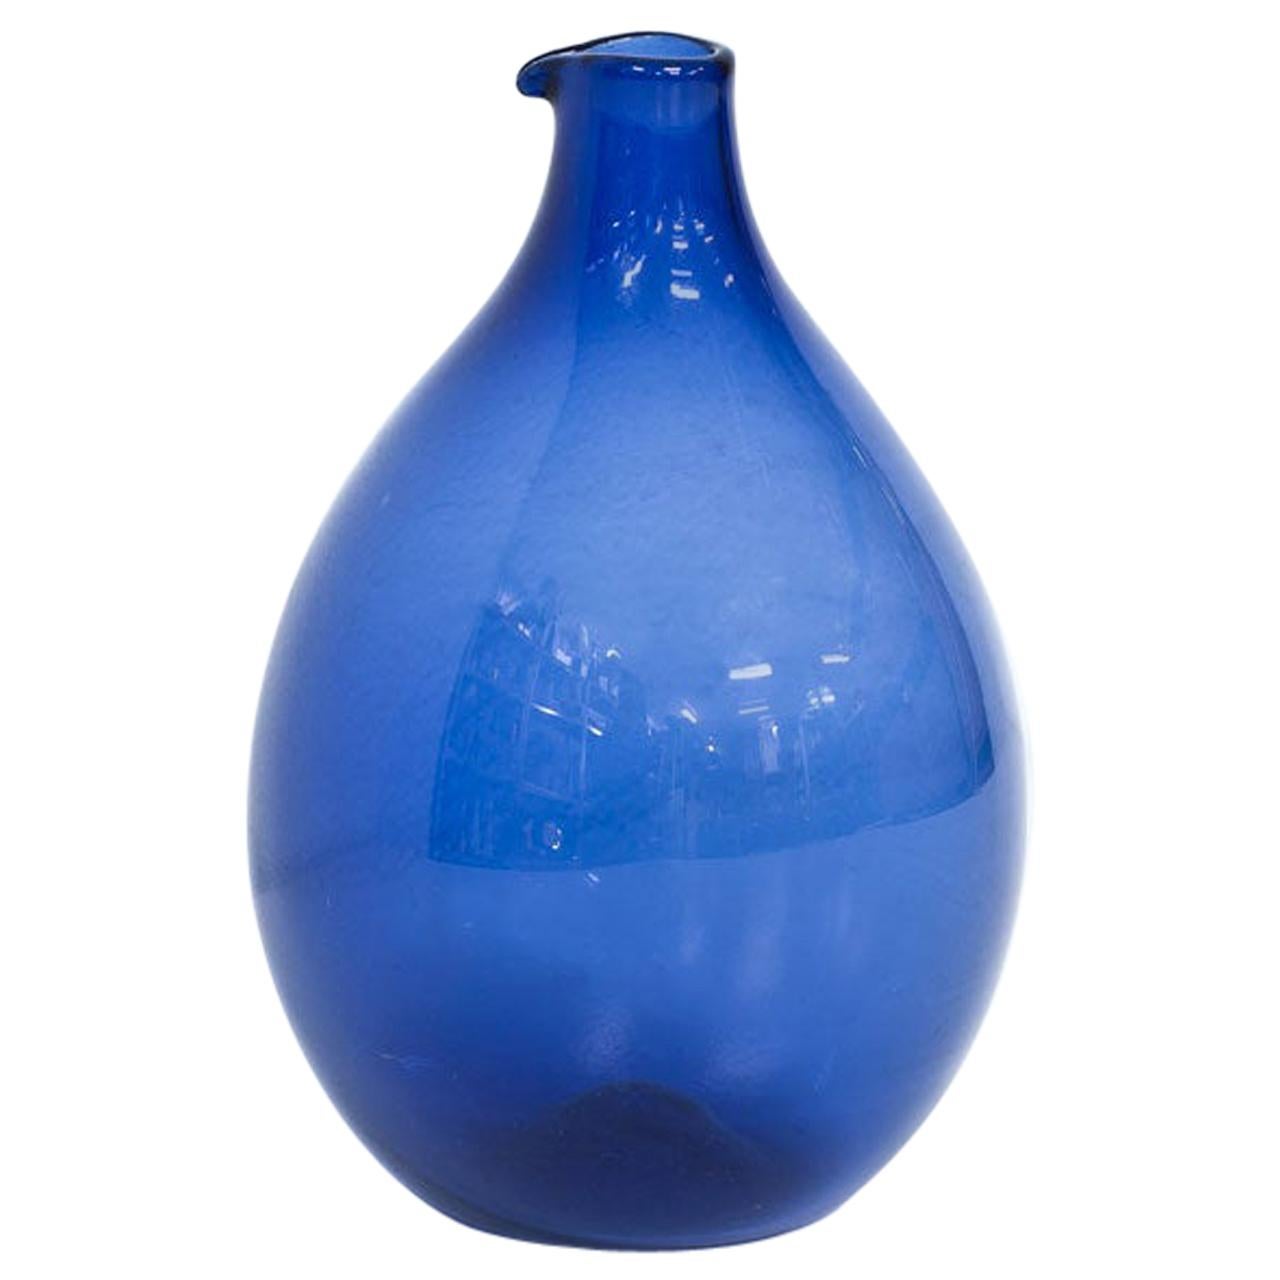 Midcentury "Pullo" Glass Vase by Timo Sarpaneva for Iittala, Finland